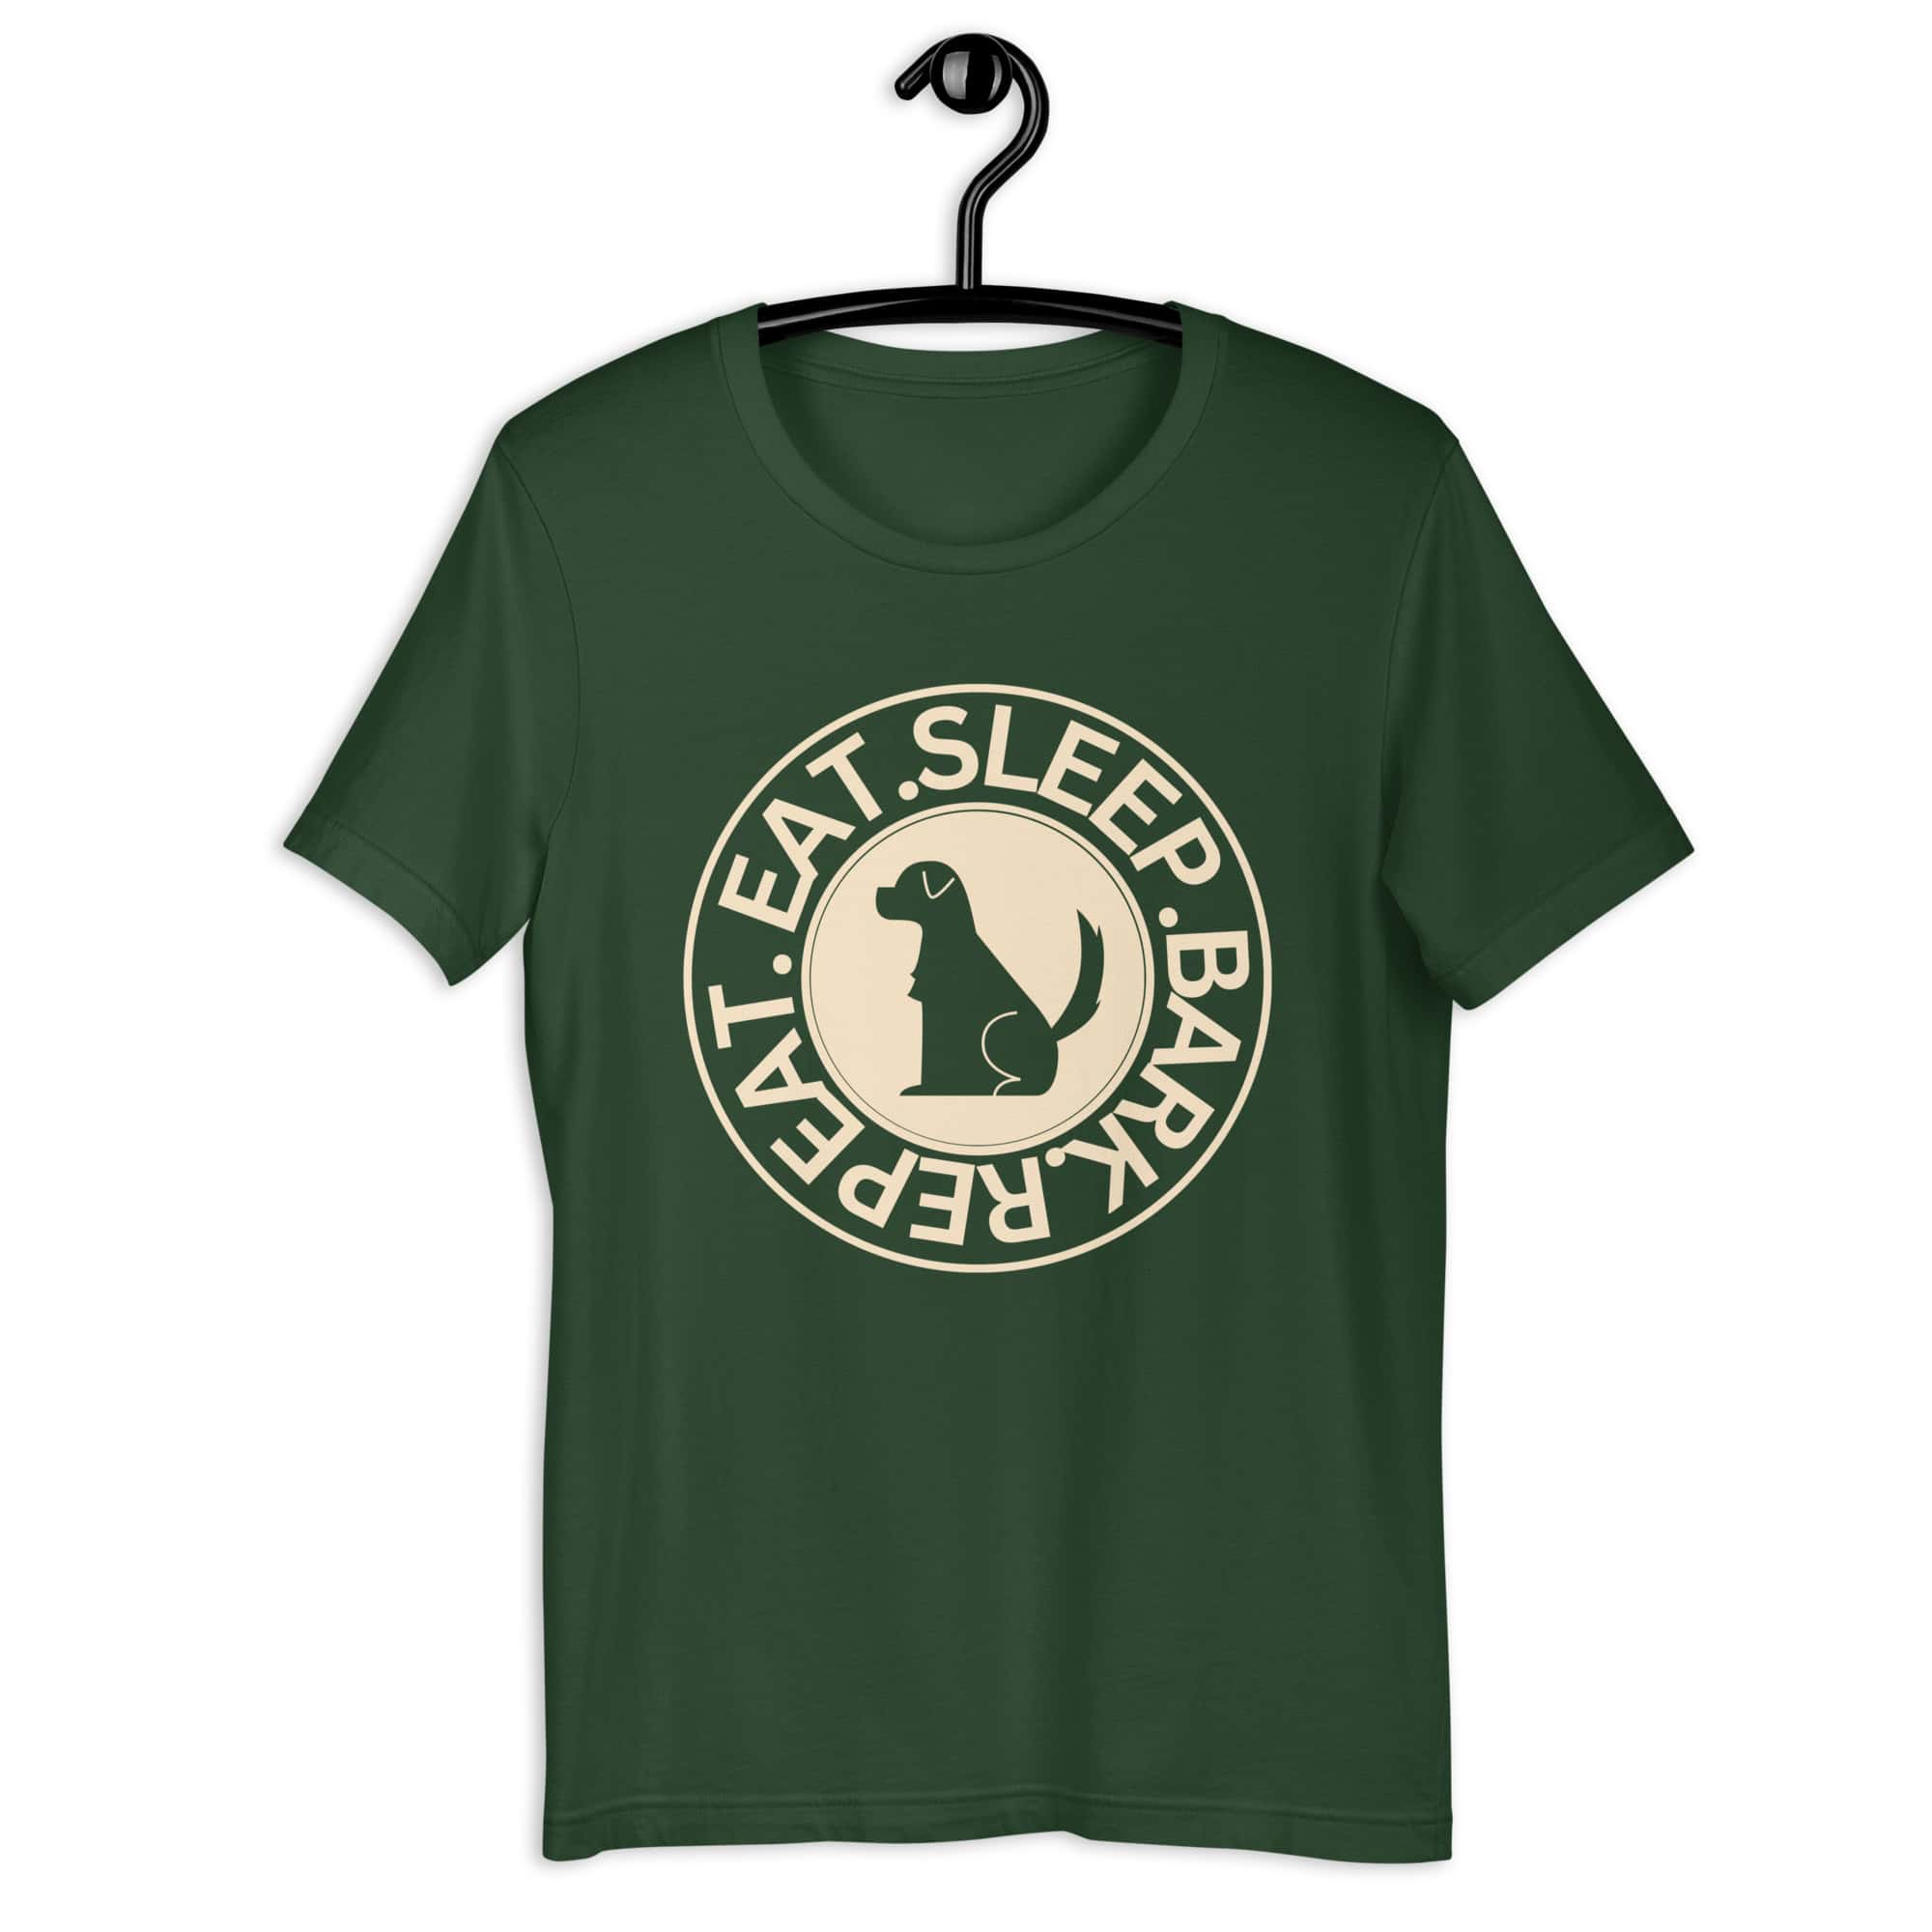 Eat Sleep Bark Repeat Ansylvanian Hound Unisex T-Shirt. Forest